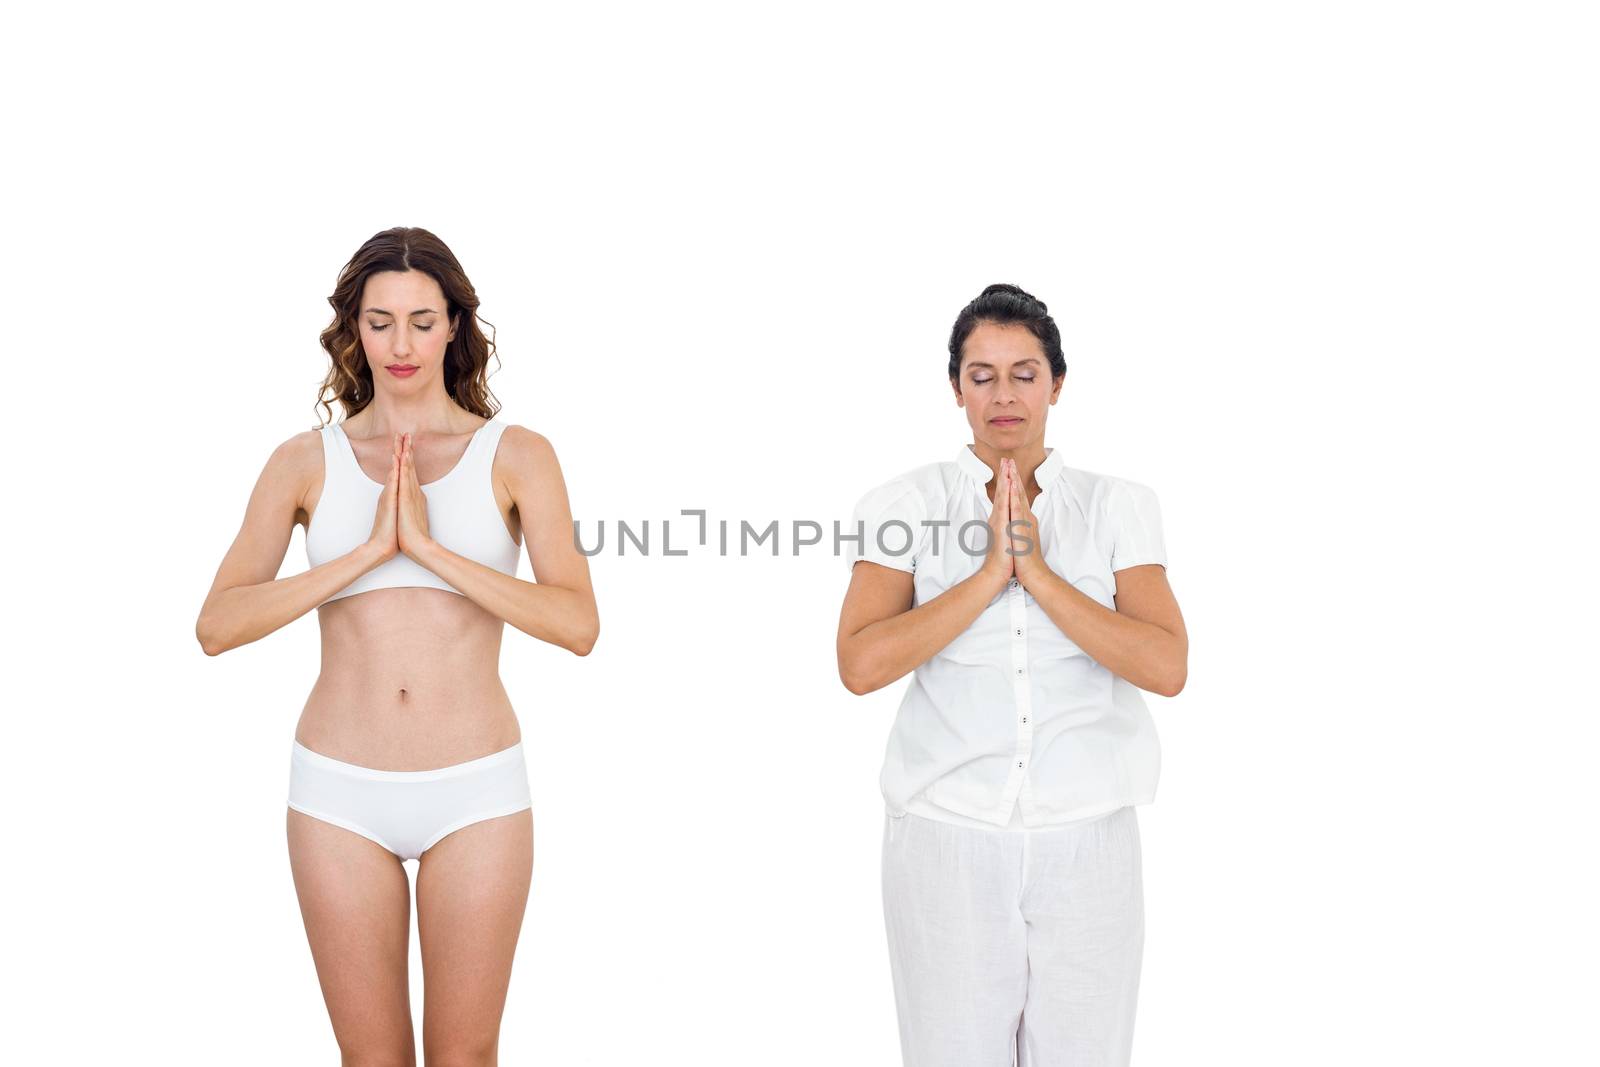 Relaxed women doing yoga on white background